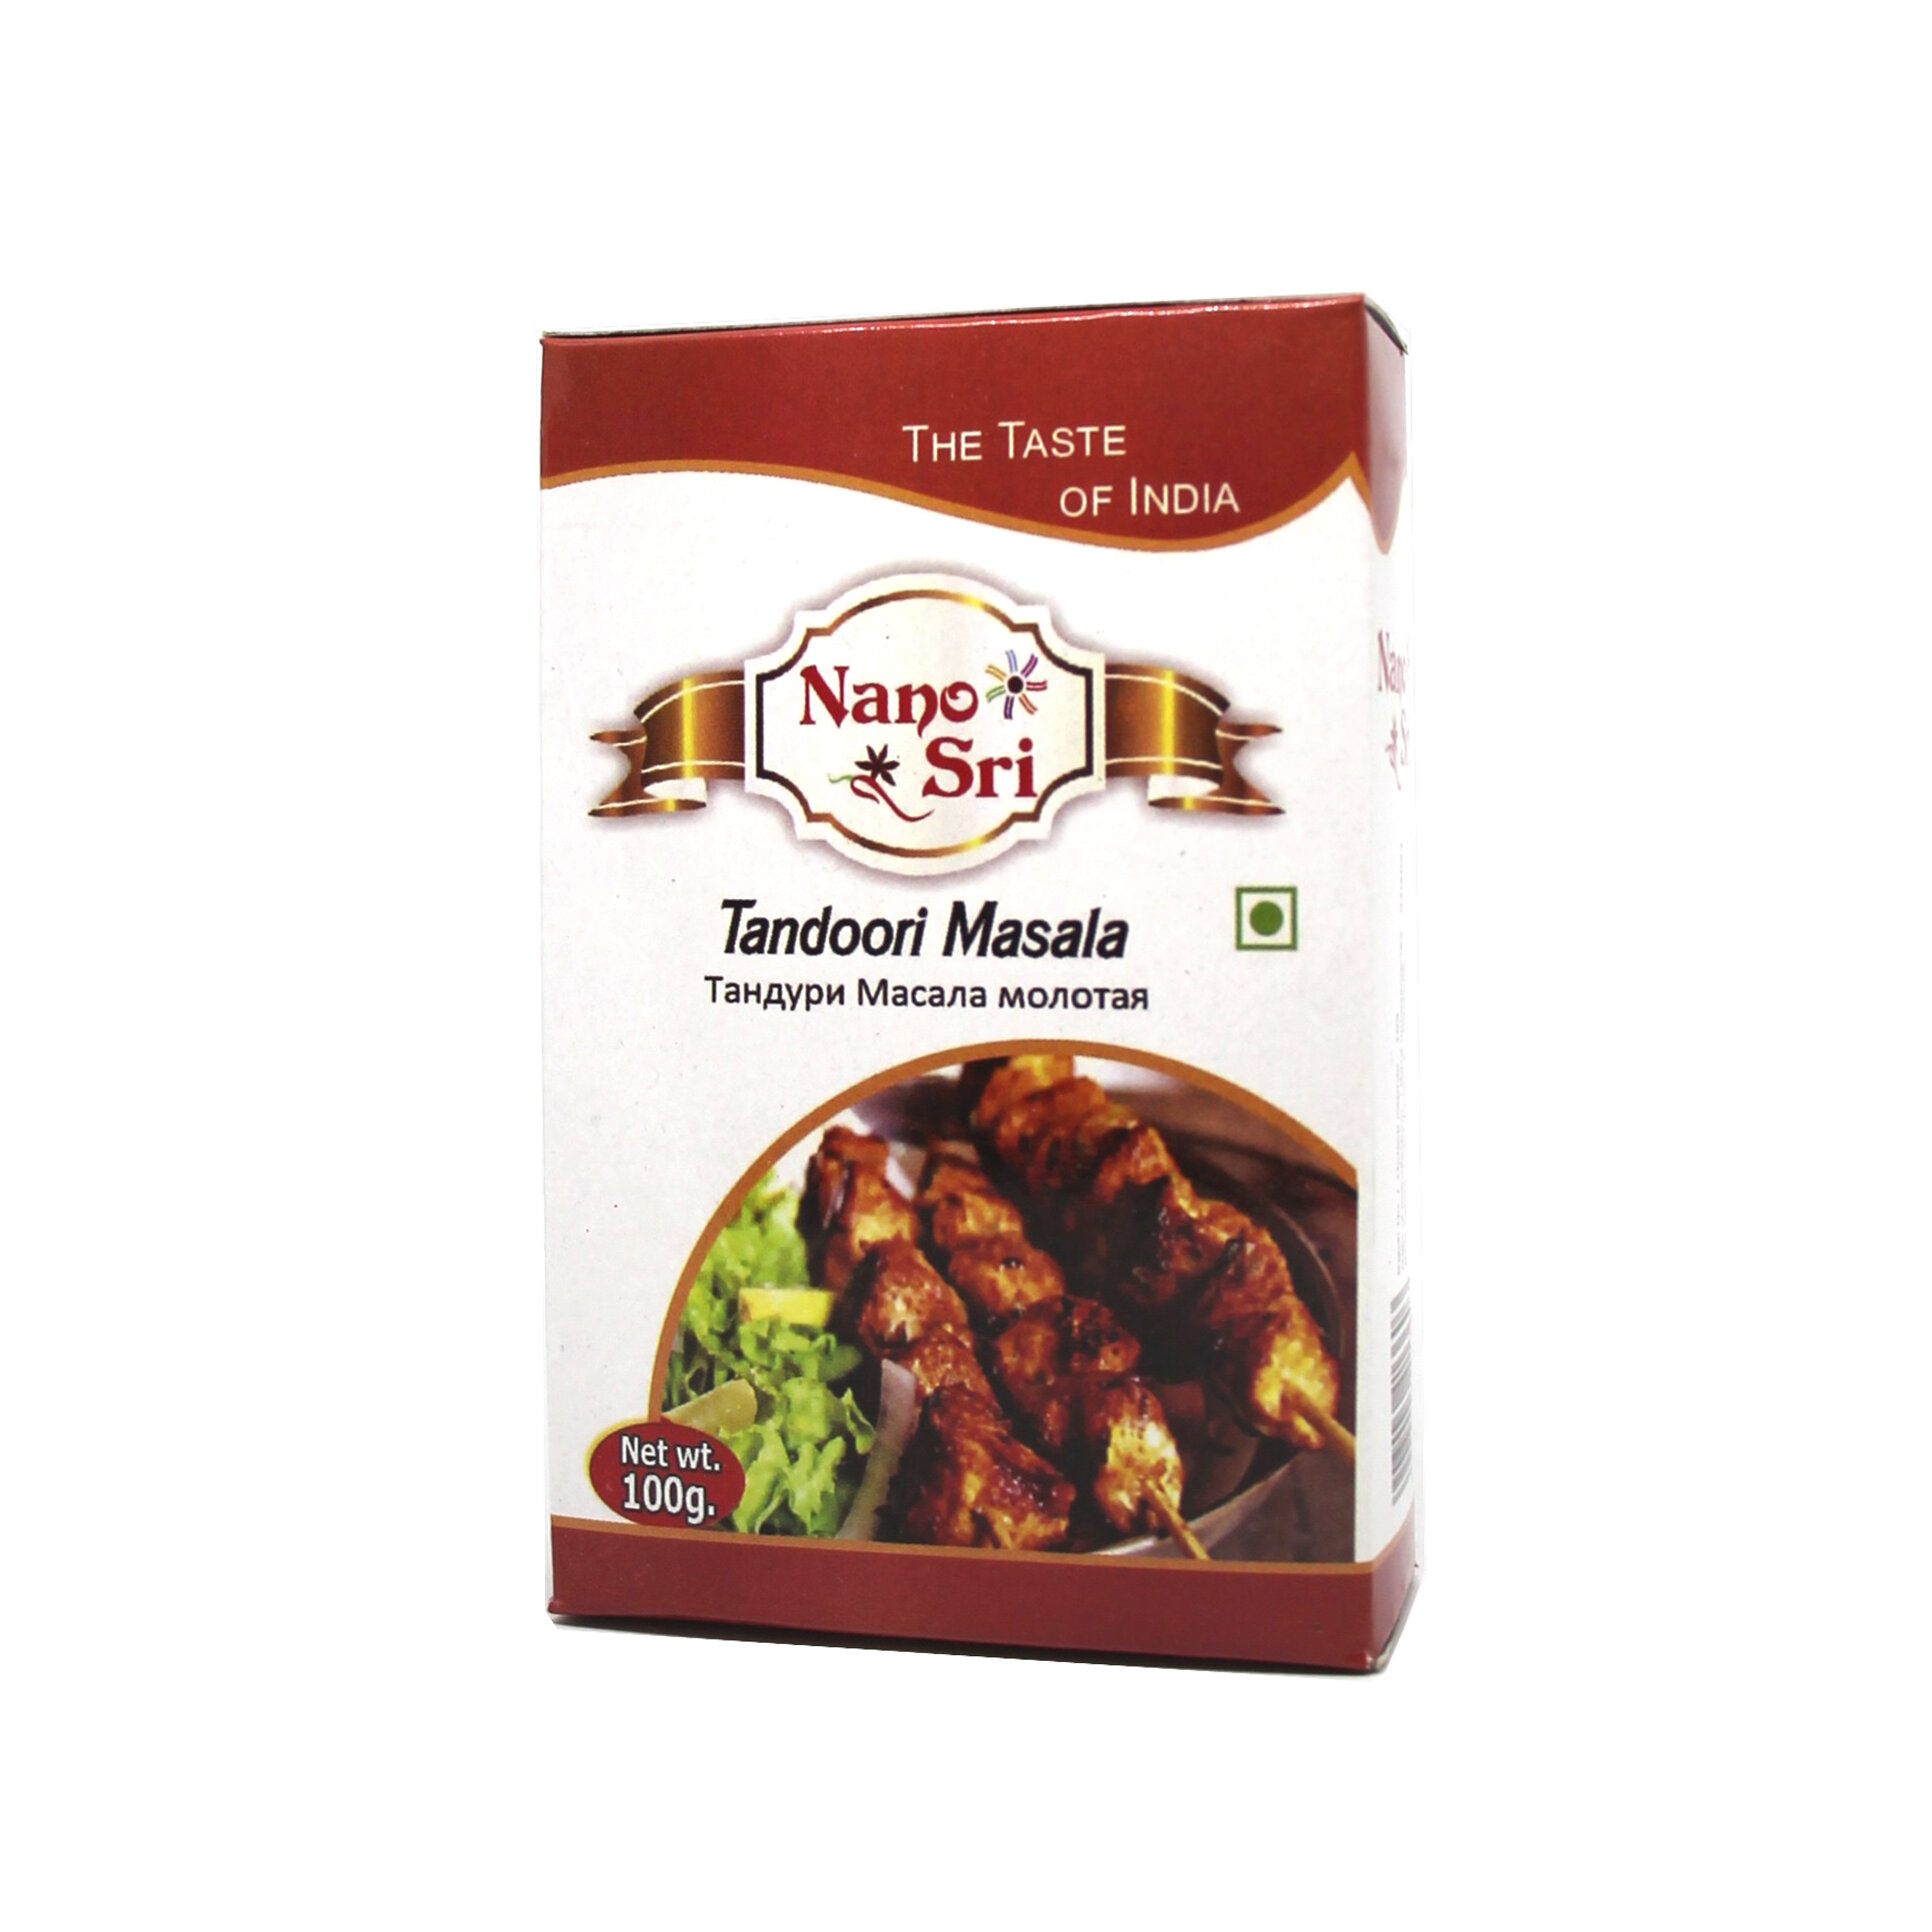 Приправа Тандури масала для шашлыка Tanduri masala Наносри (Индия) 100 гр